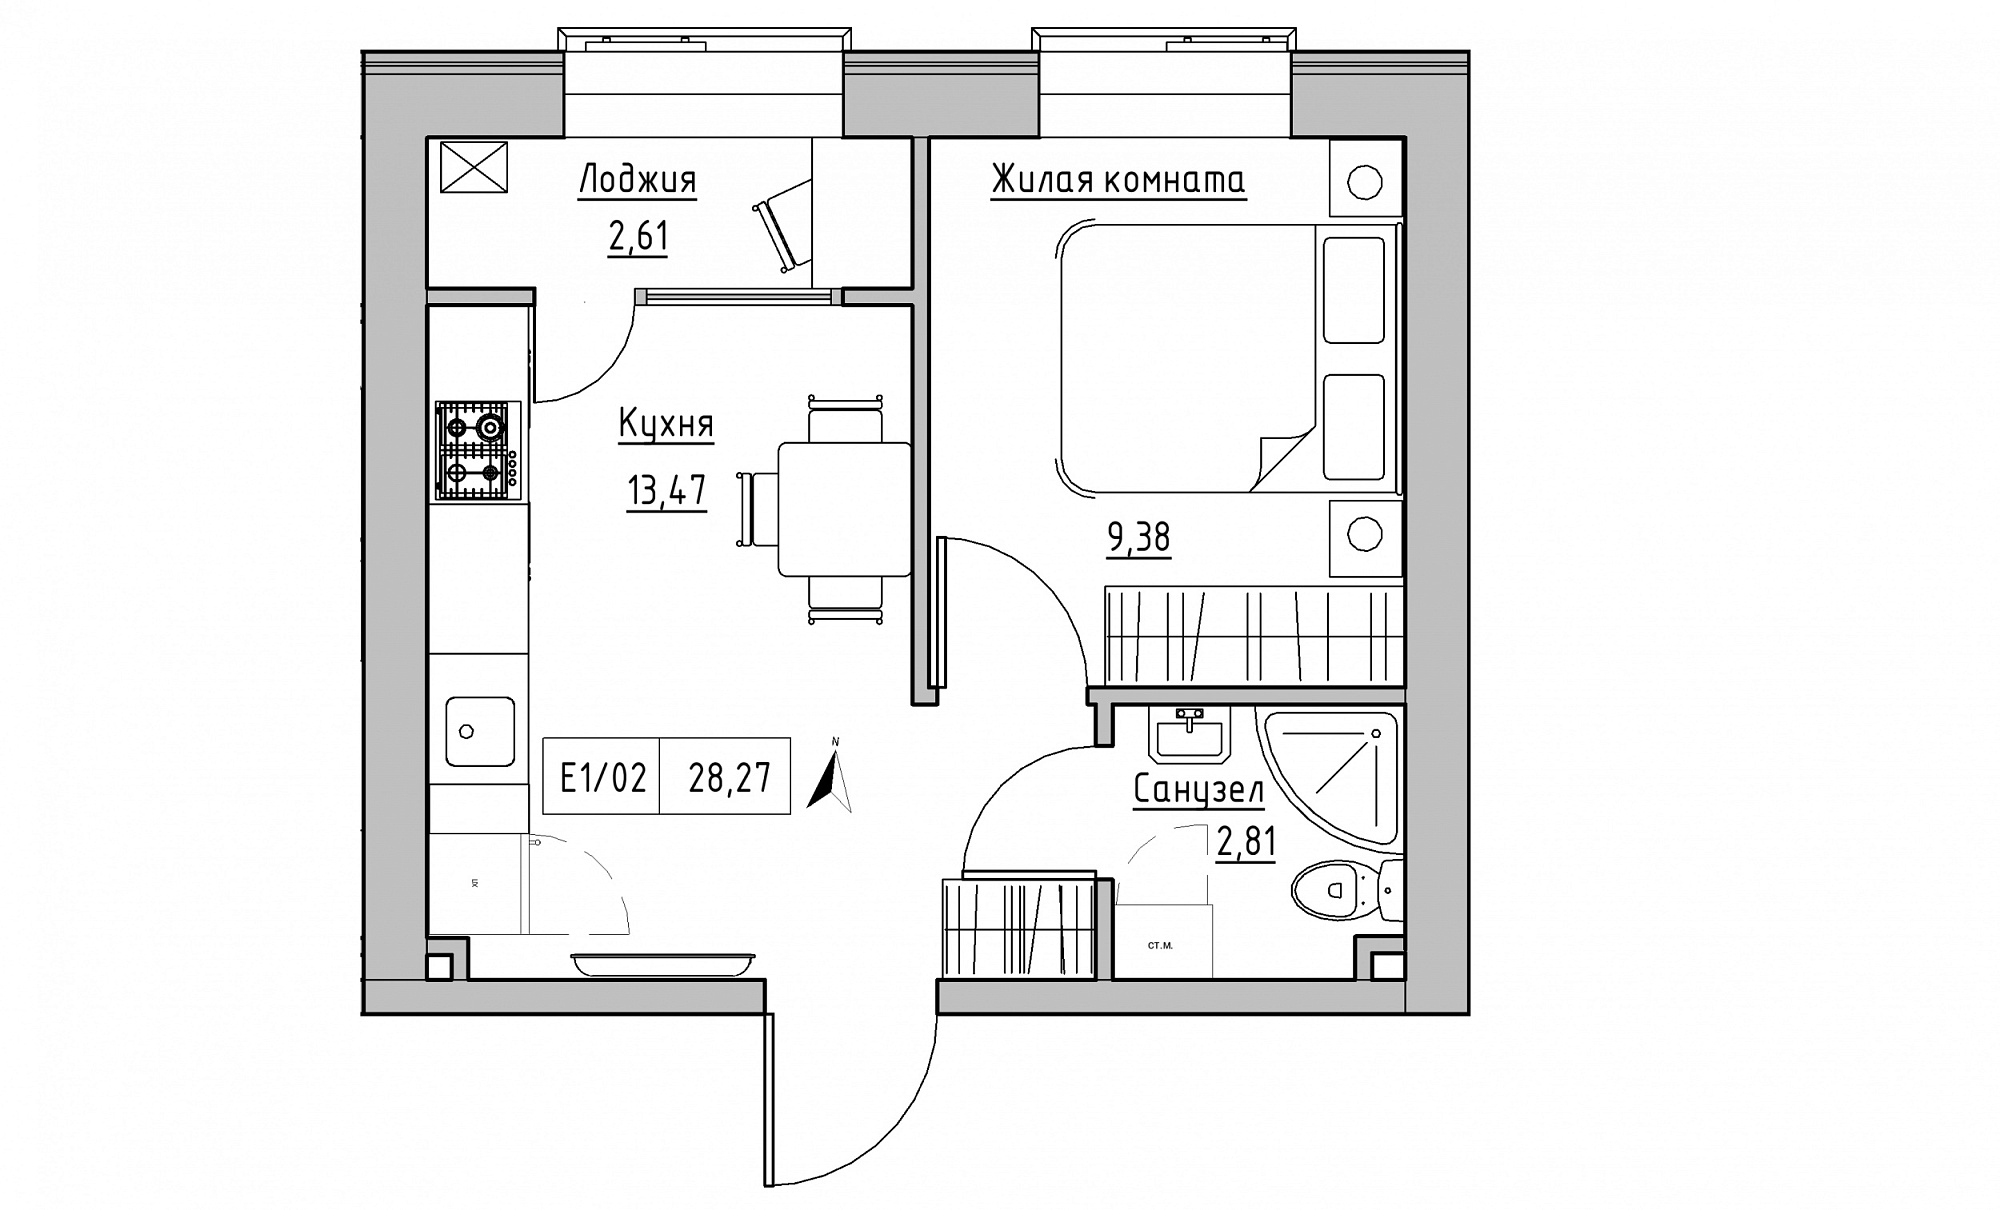 Planning 1-rm flats area 28.27m2, KS-015-02/0015.